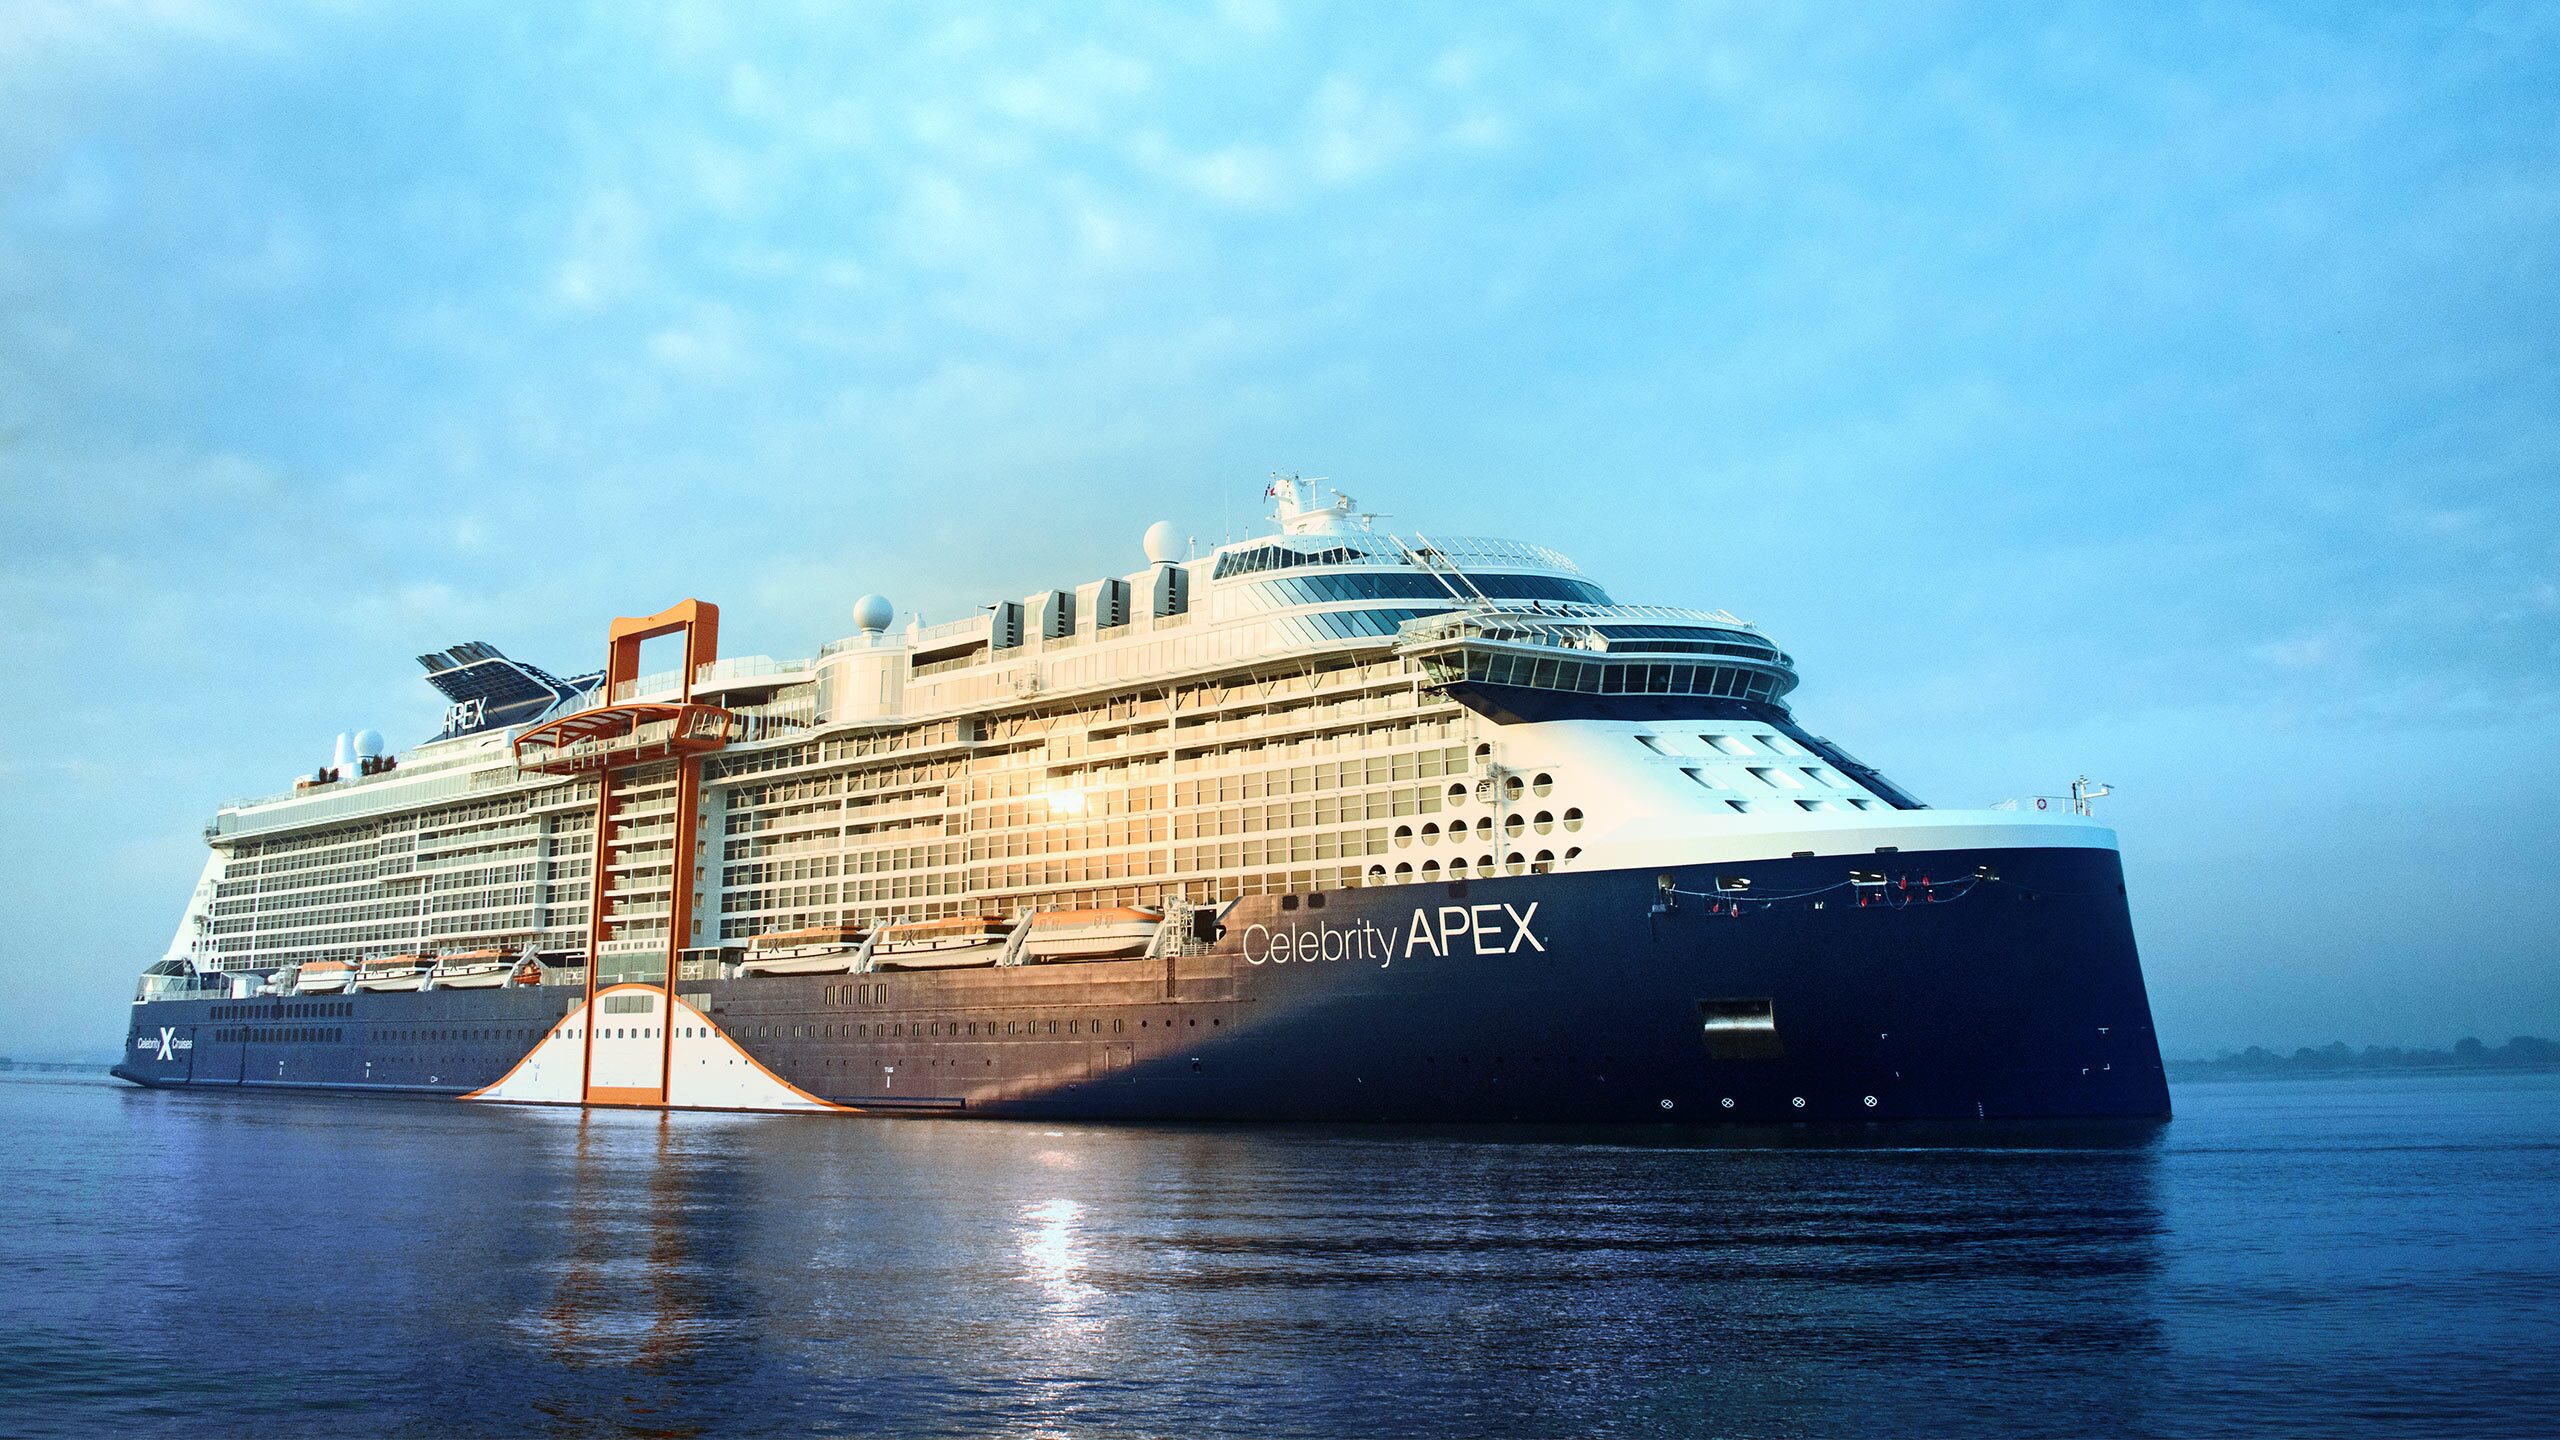 celebrity apex baltic cruise